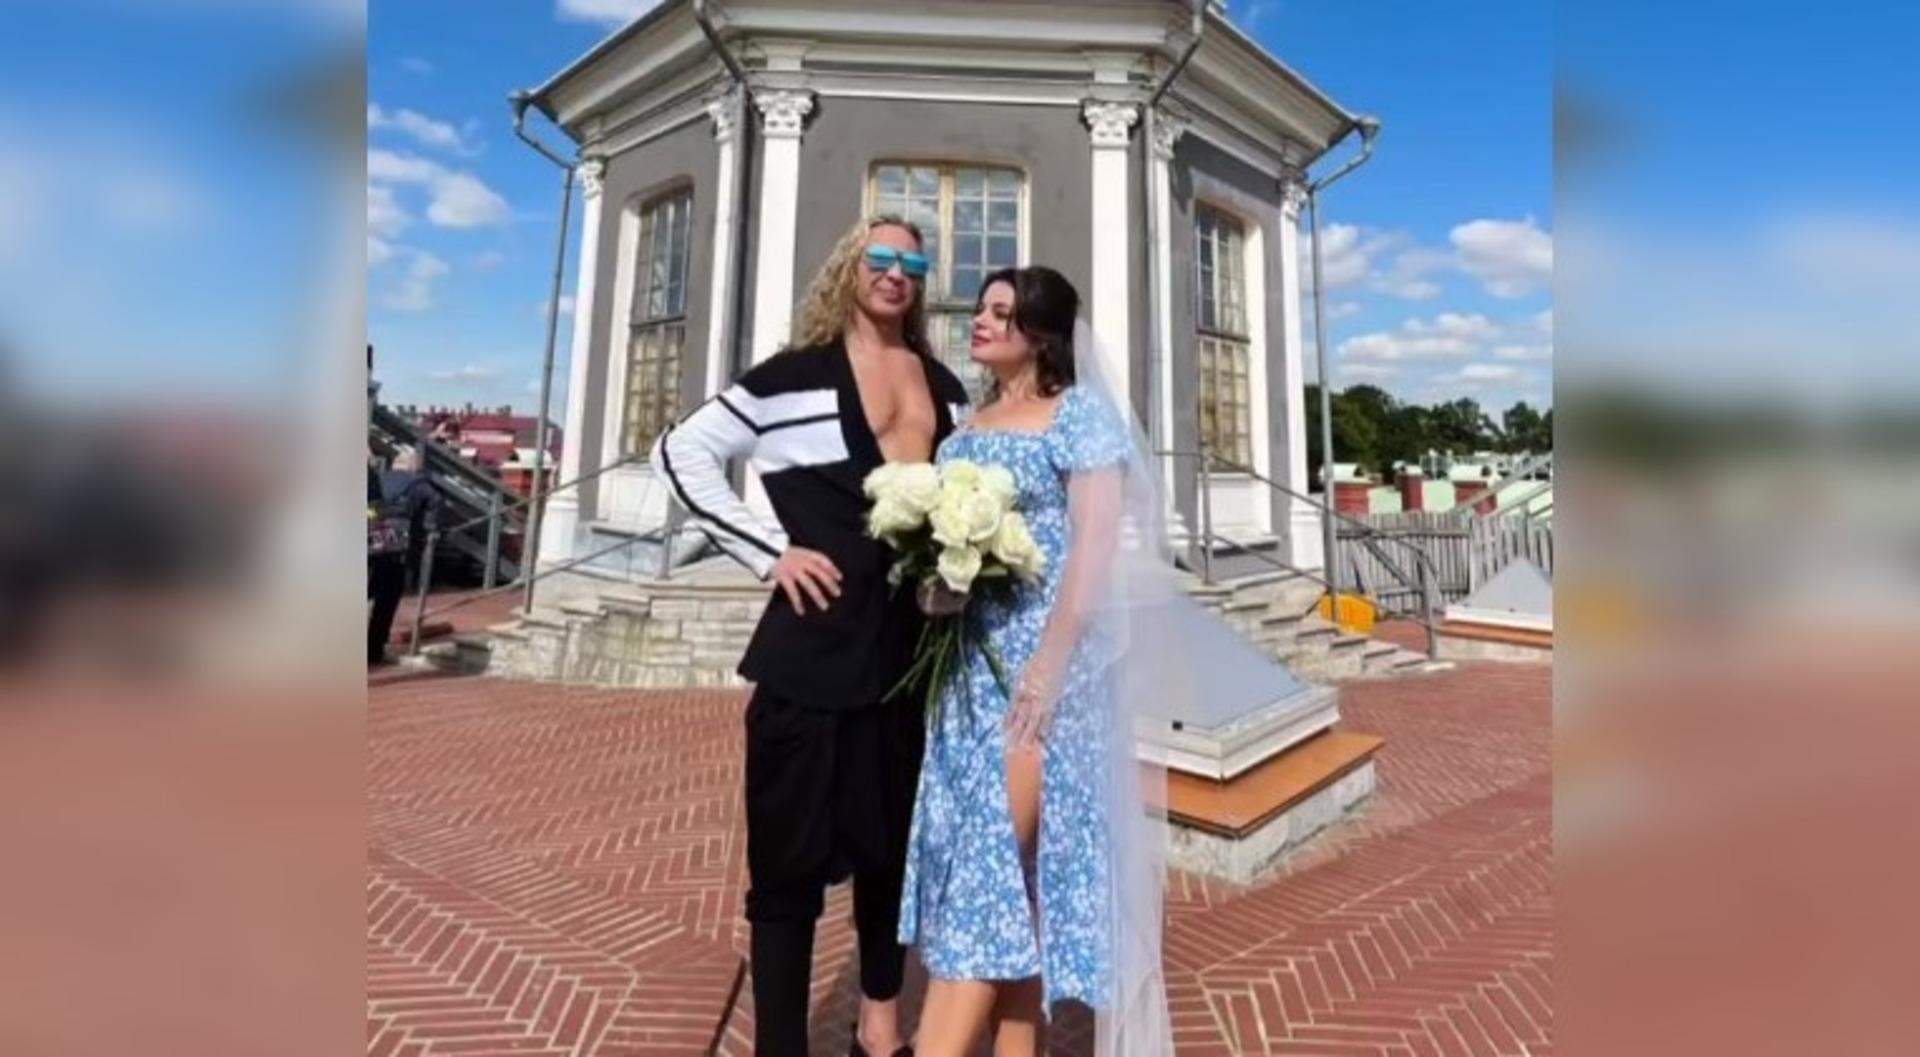 леонид радвинский и наташа королева фото биография